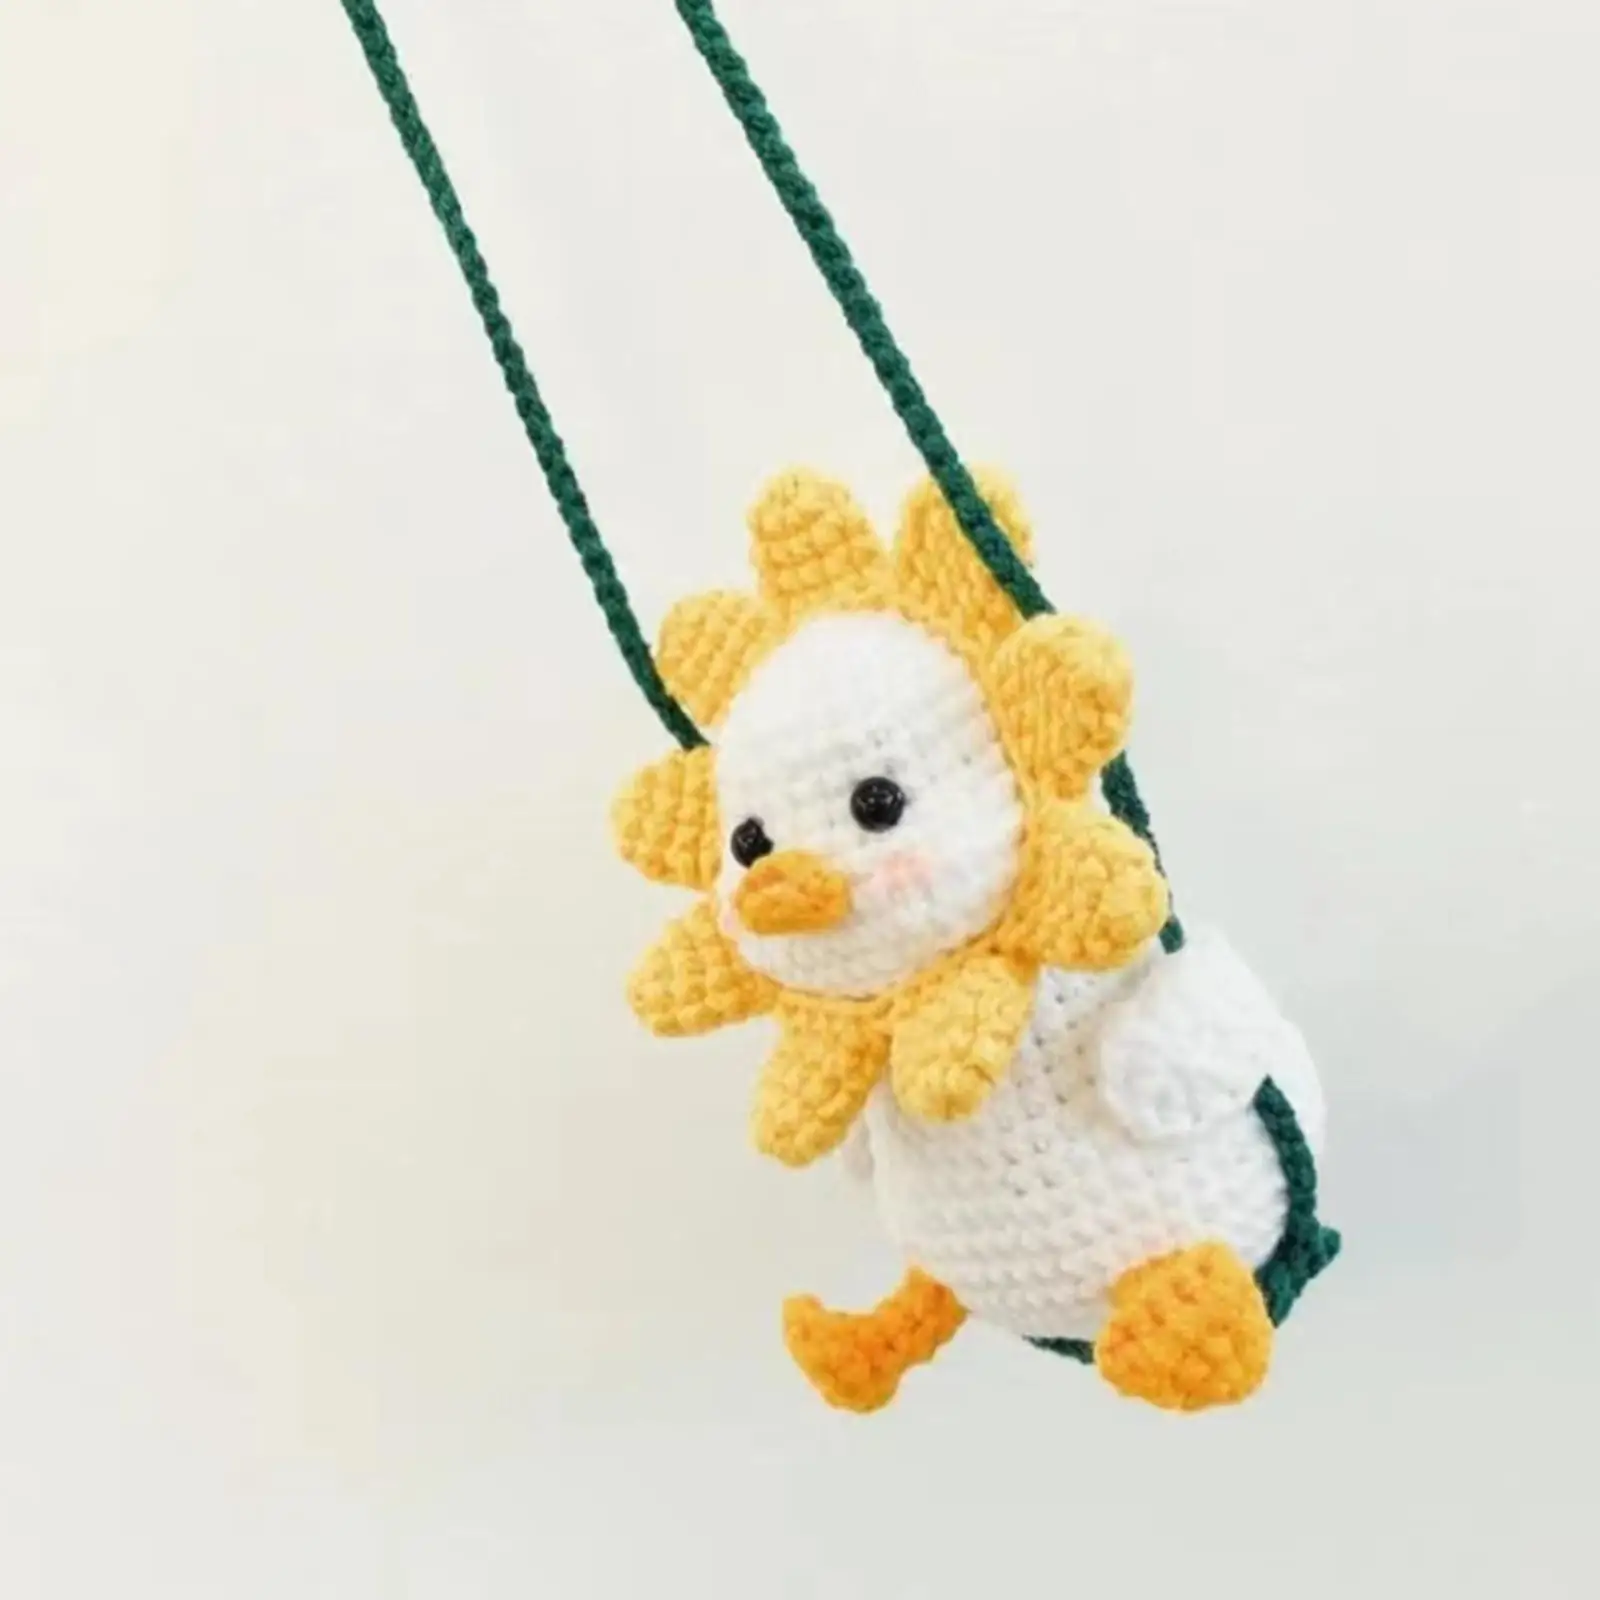 Crochet Set for Beginner, DIY Duck Hand Made Includes Yarn, Hook Make Your Own Doll Needlework for Home Decor Gift